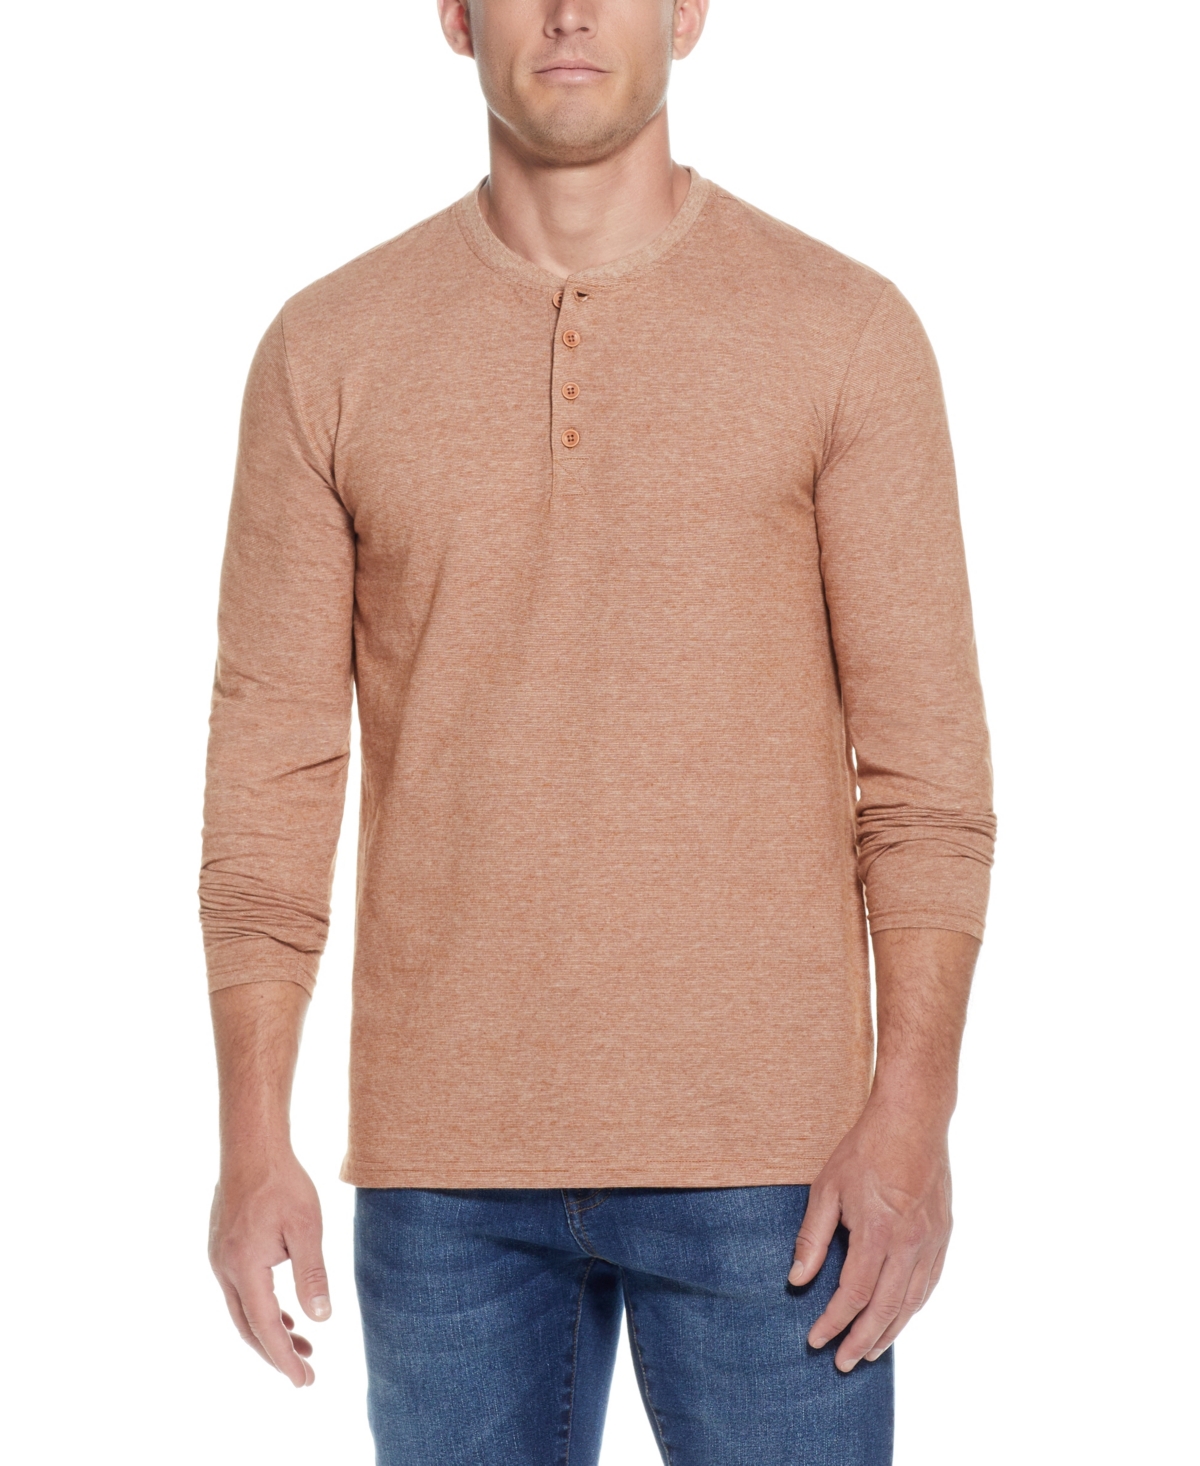 Men's Long Sleeved Microstripe Henley T-shirt - Caramel Cafe